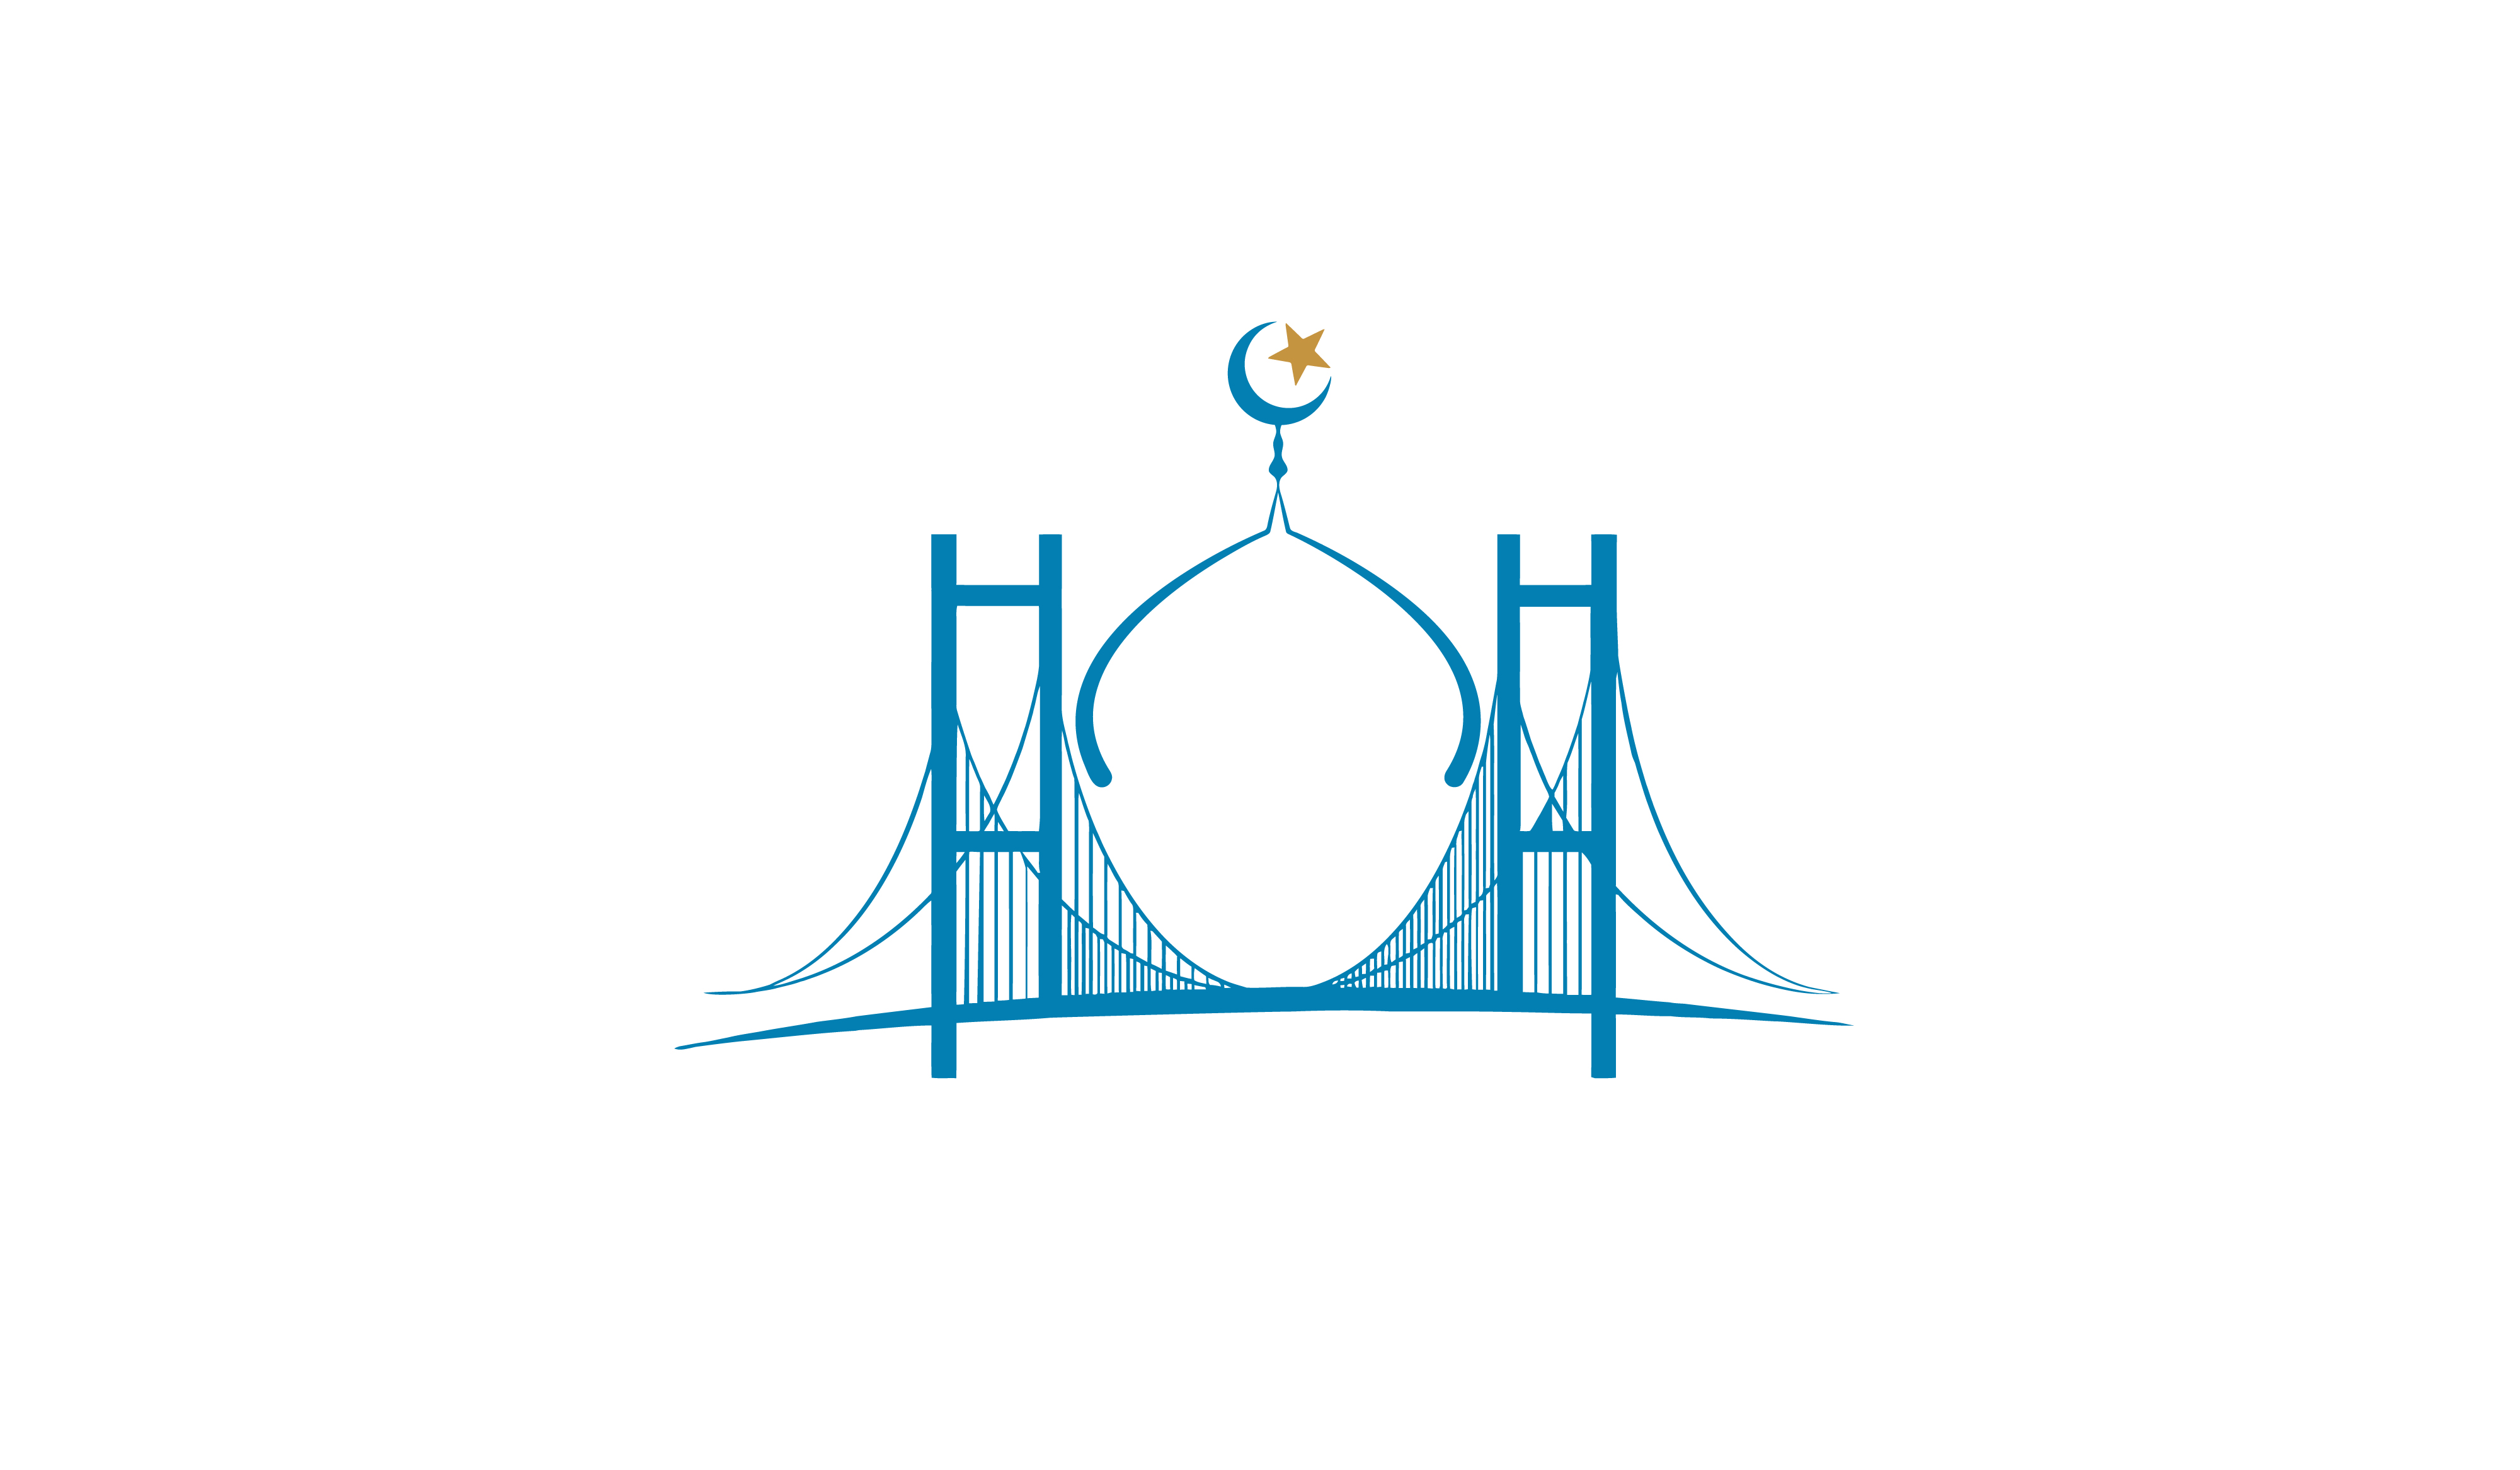 Islamic Center of San Francisco WAQF logo